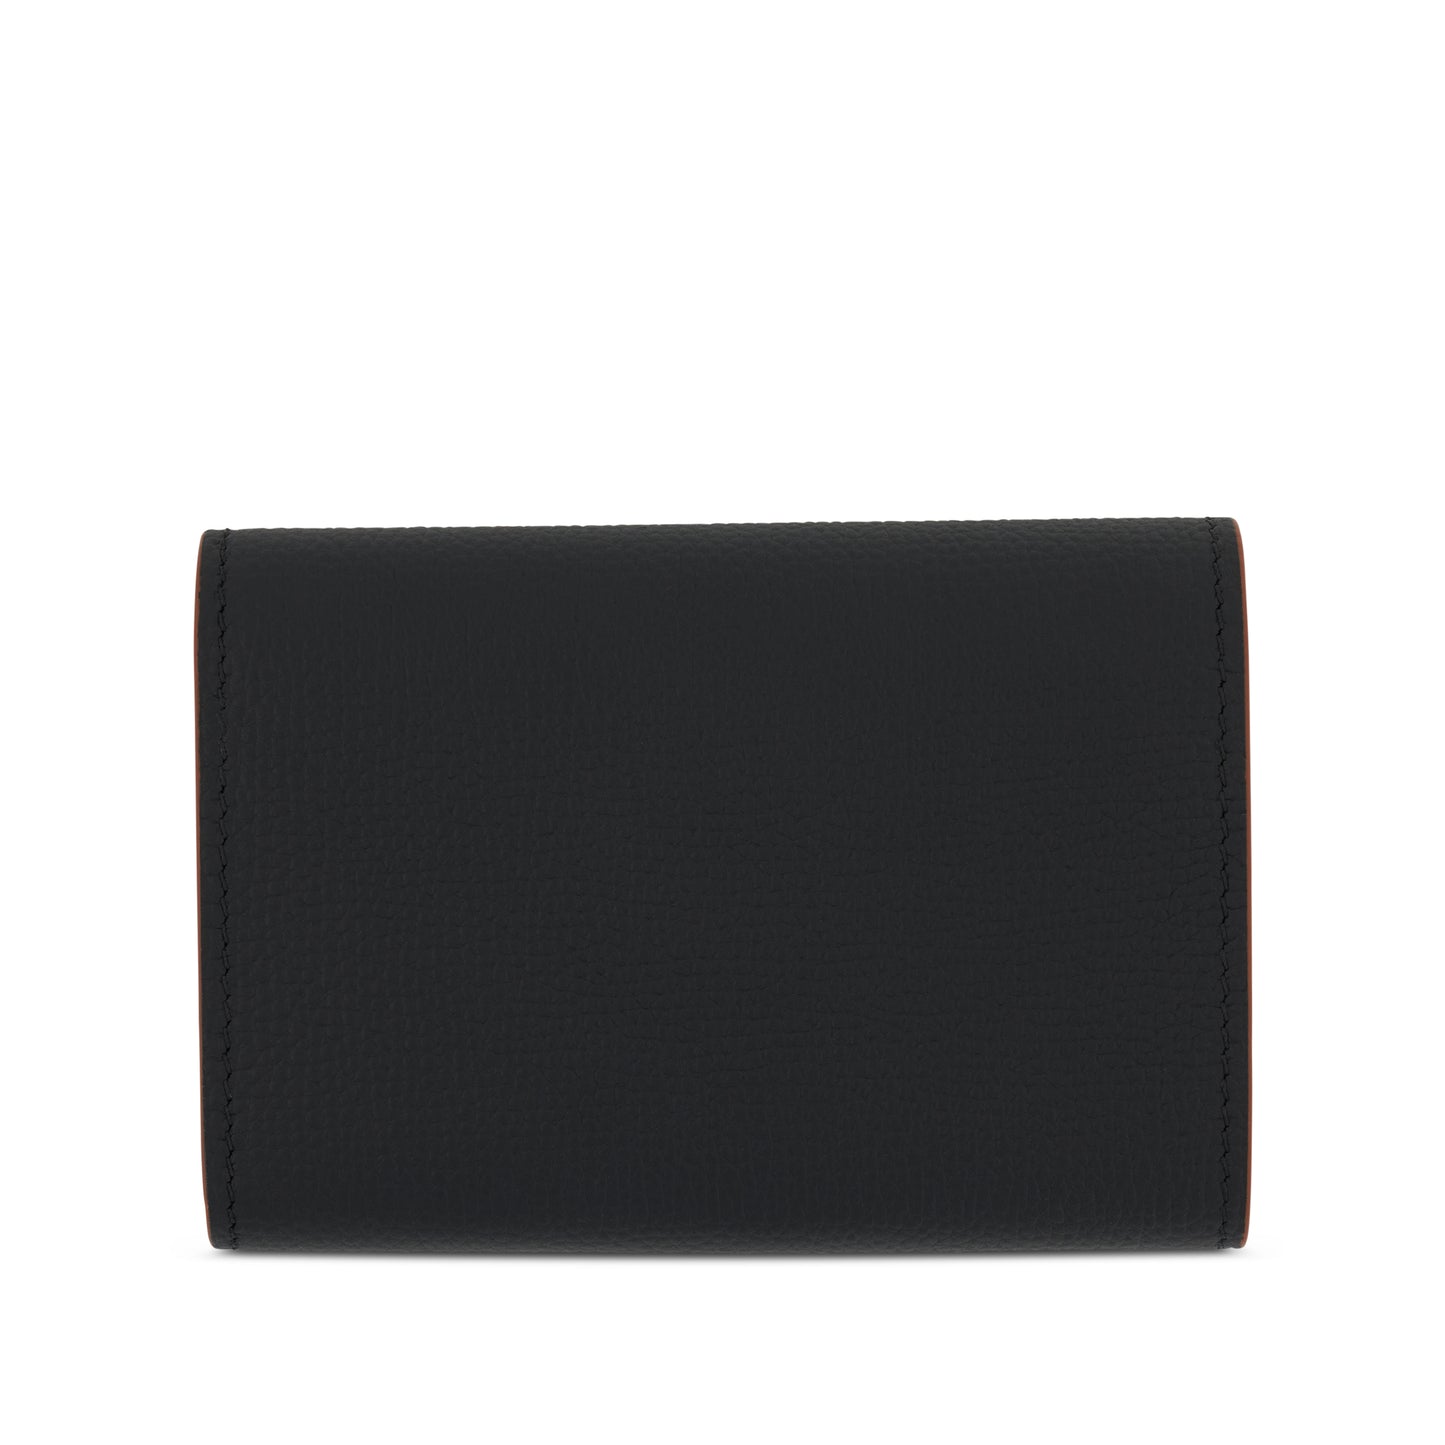 Anagram Small Vertical Wallet in Pebble Grain Calfskin in Black